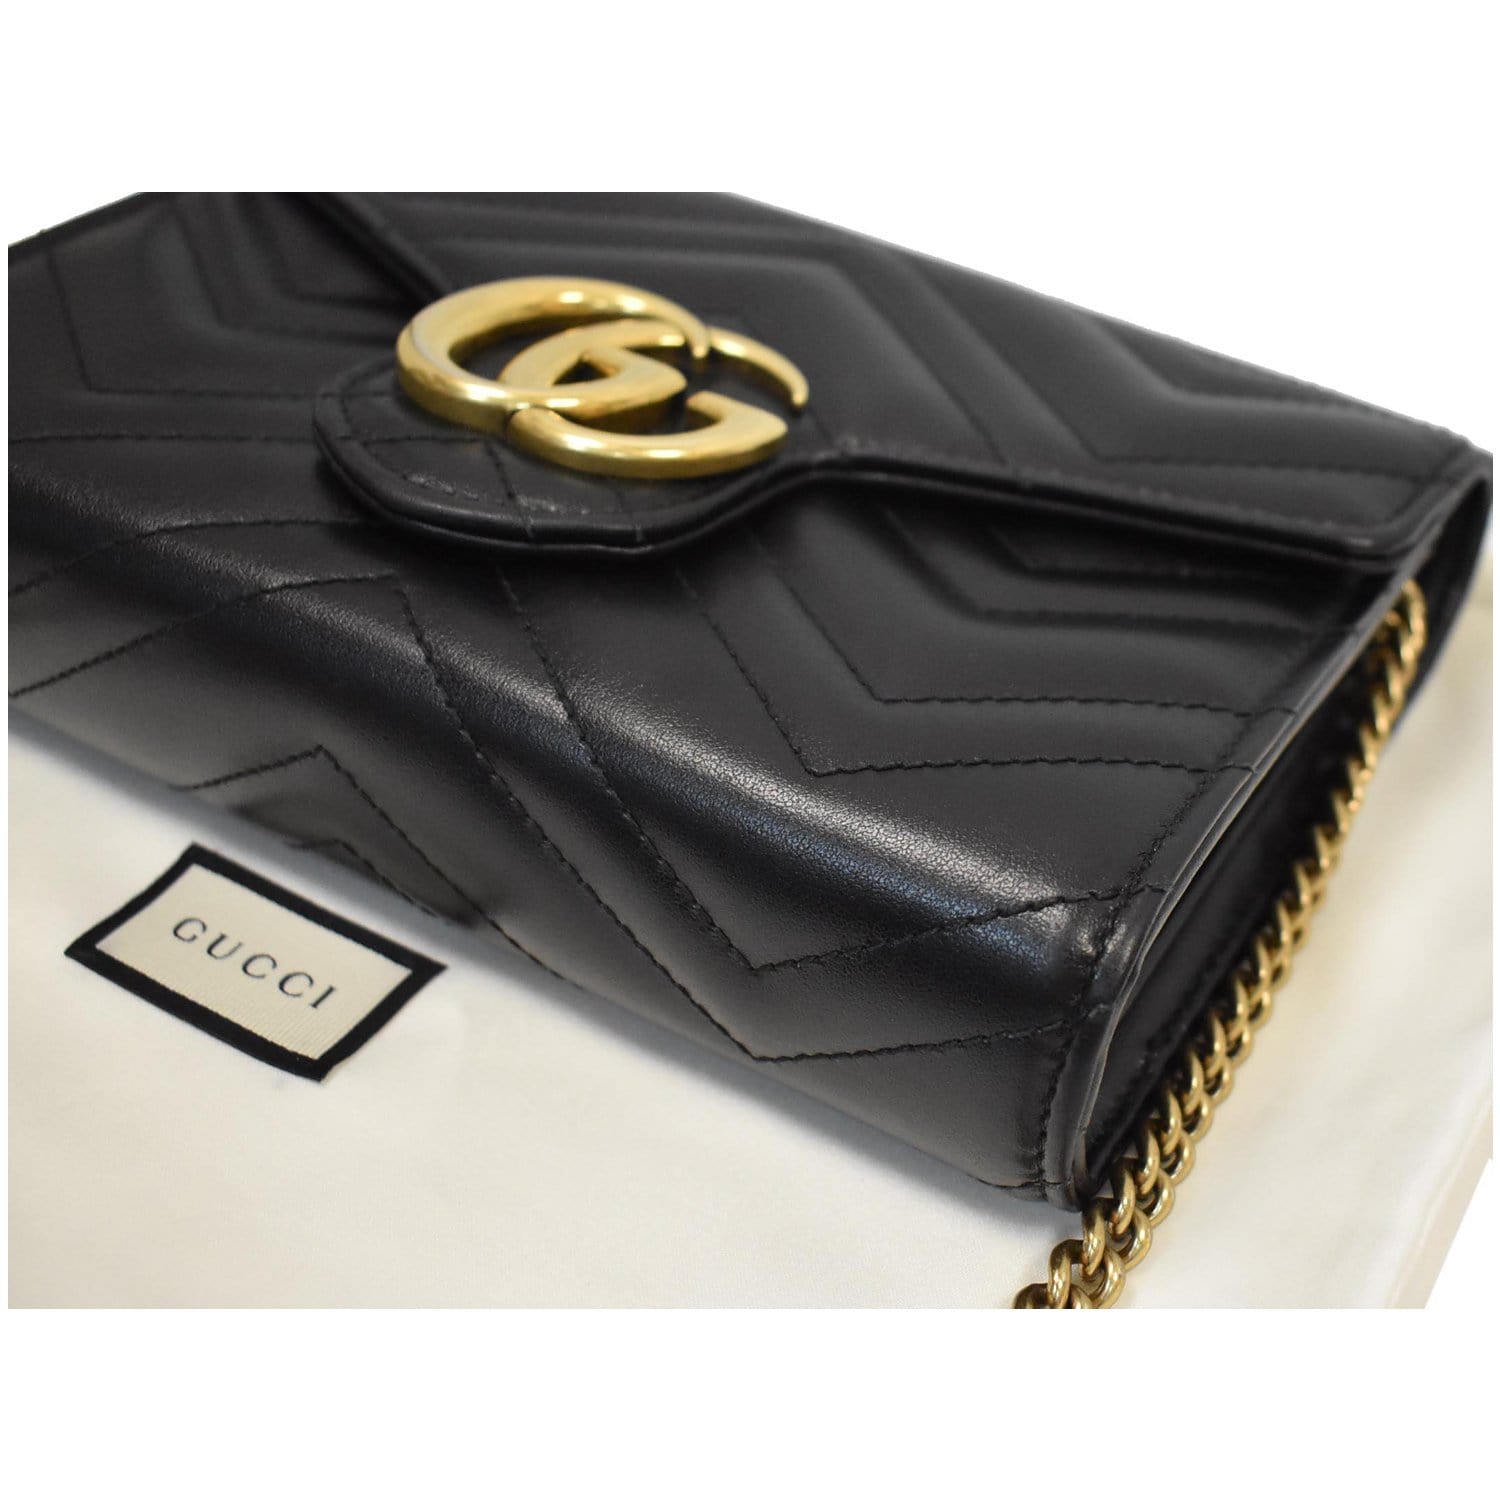 Gucci GG Marmont Matelasse Mini Chain Bag